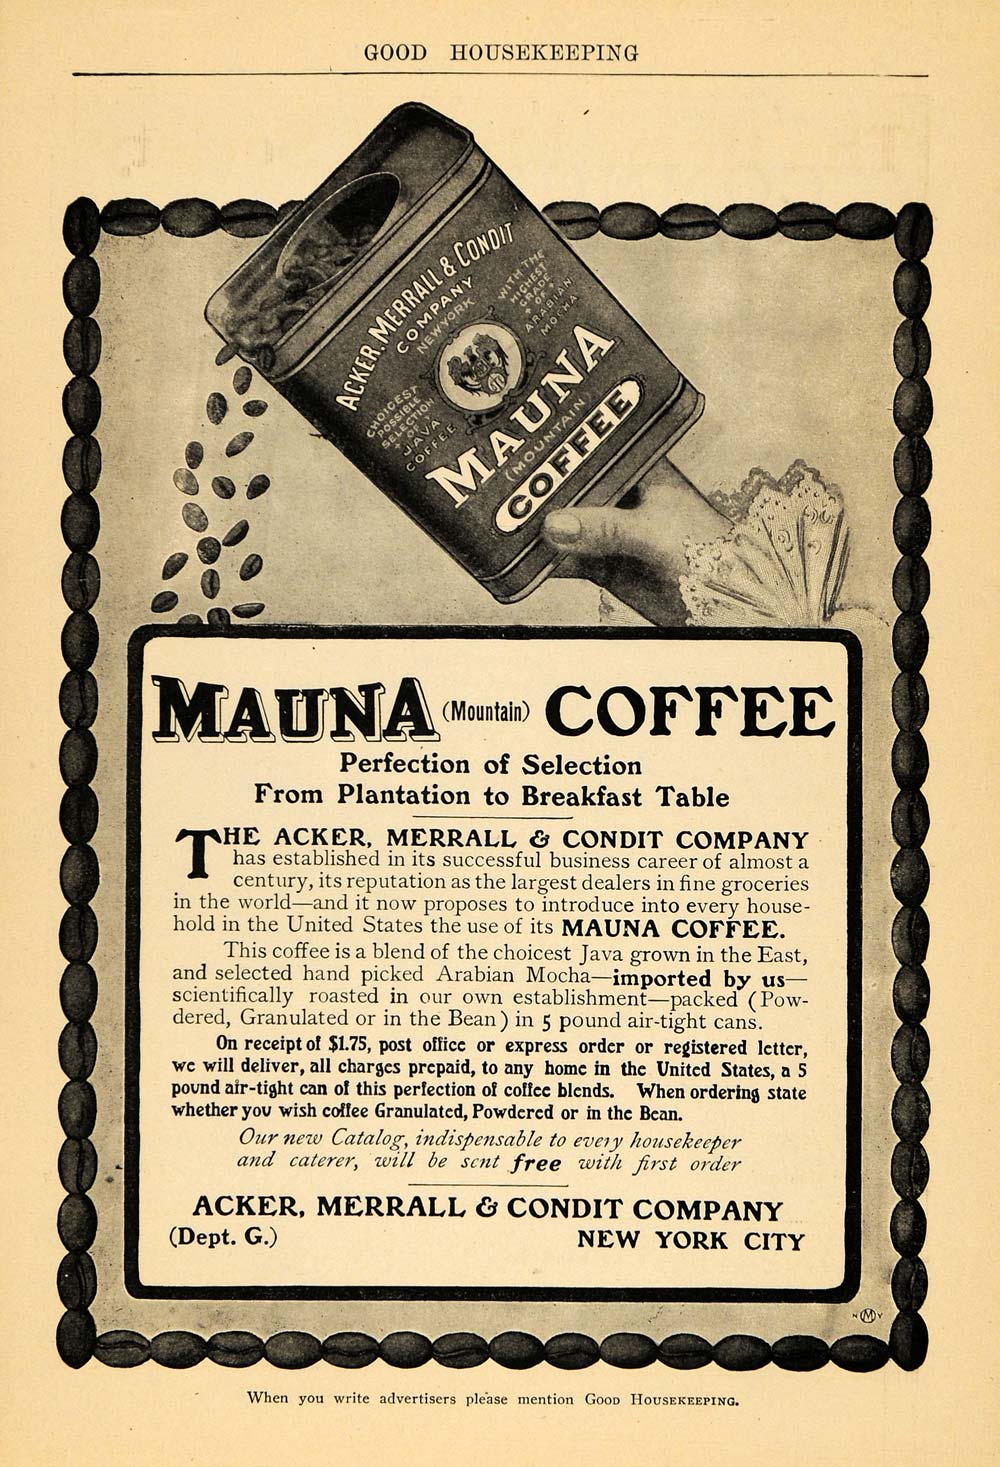 1904 Ad Mauna Mountain Coffee Tin Acker Merrall Condit - ORIGINAL GH2